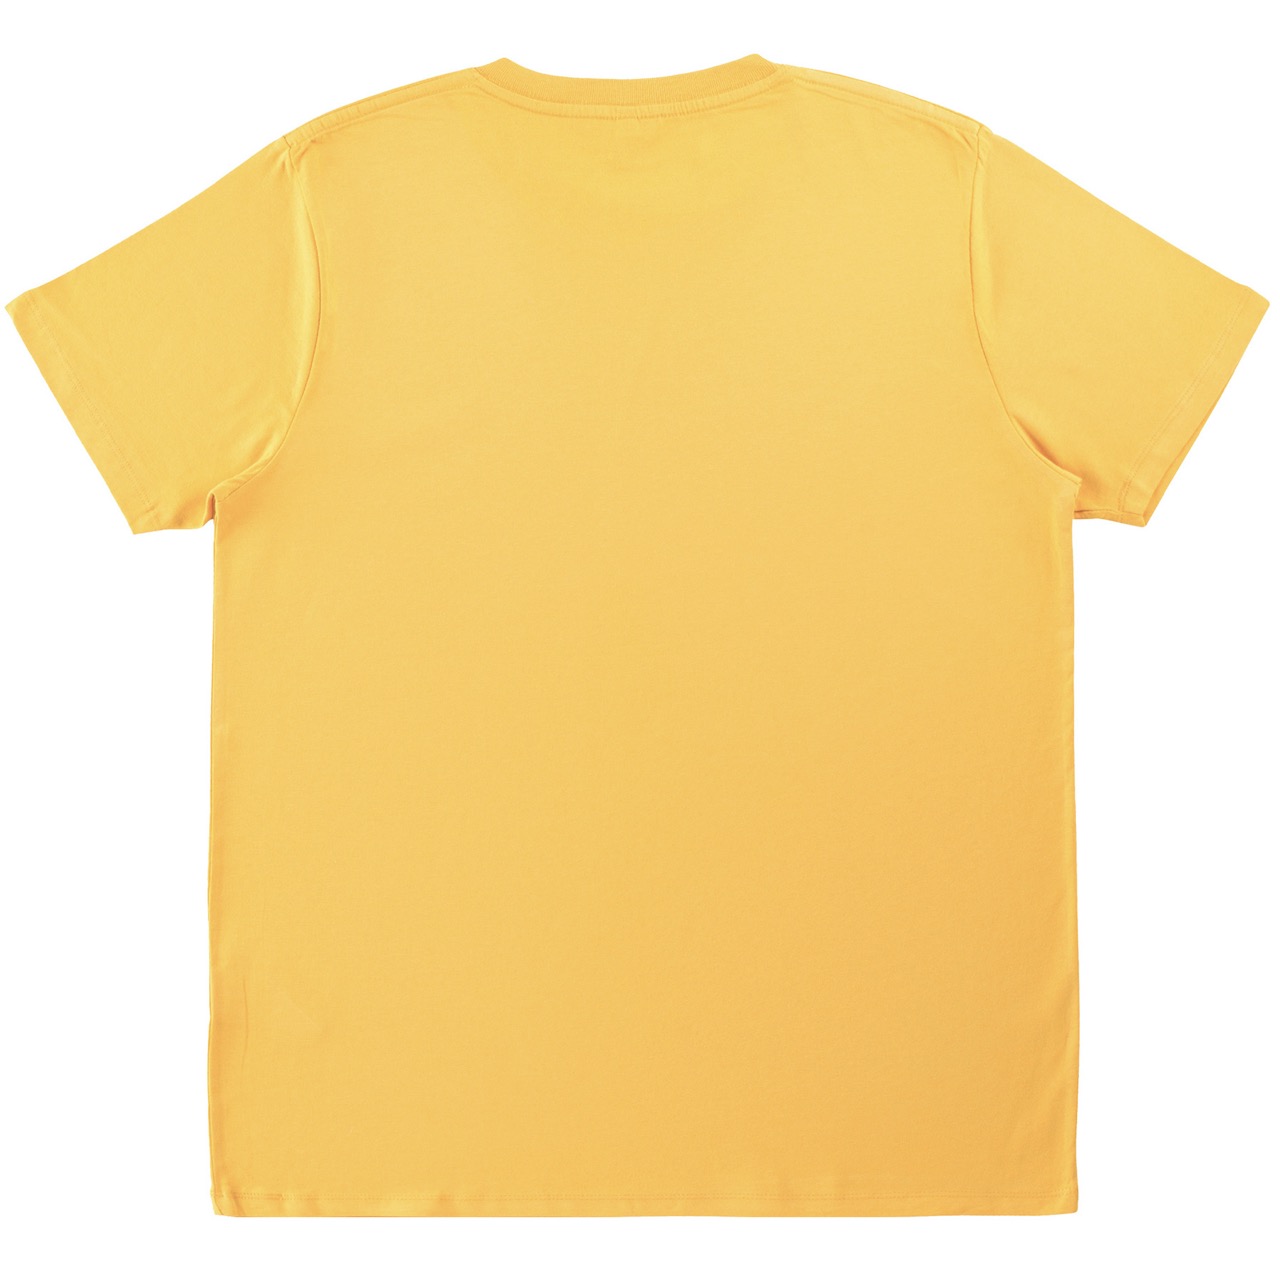 Camiseta amarilla manga corta algodón ogánico - Holocene Classics Espalda